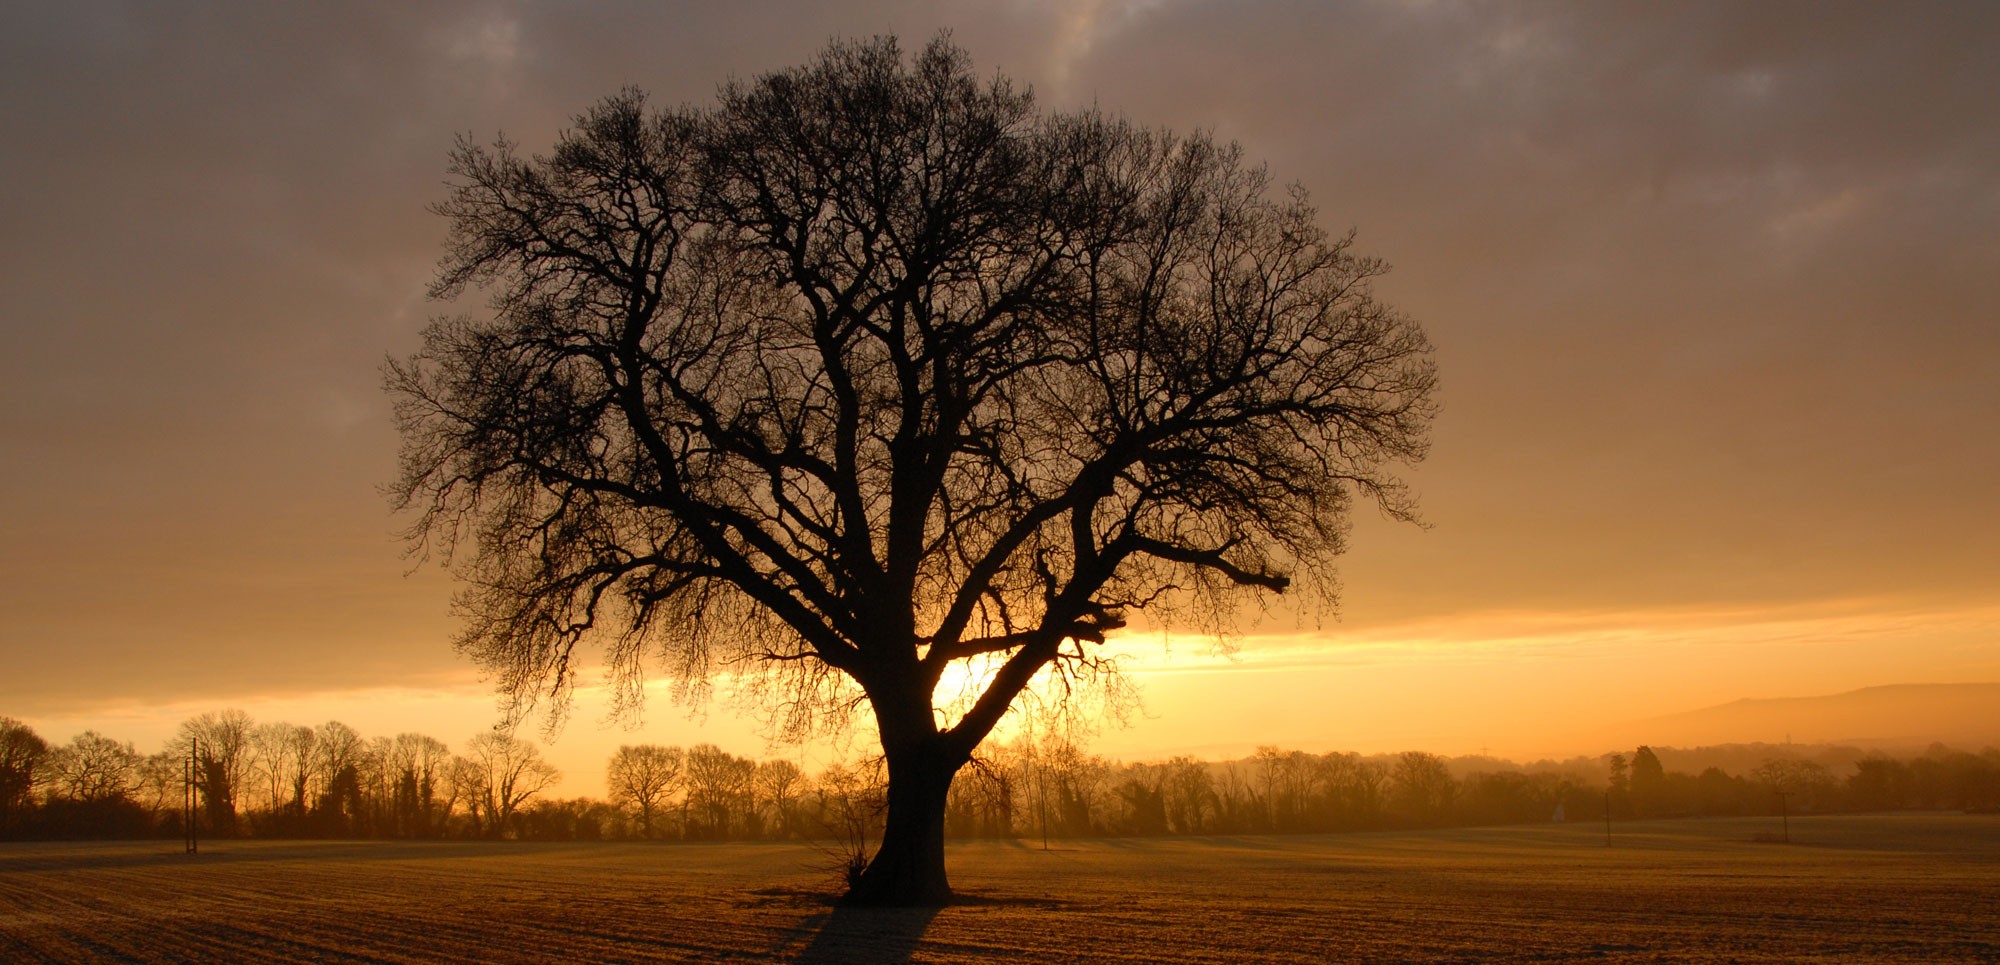 Our oak tree at sunrise